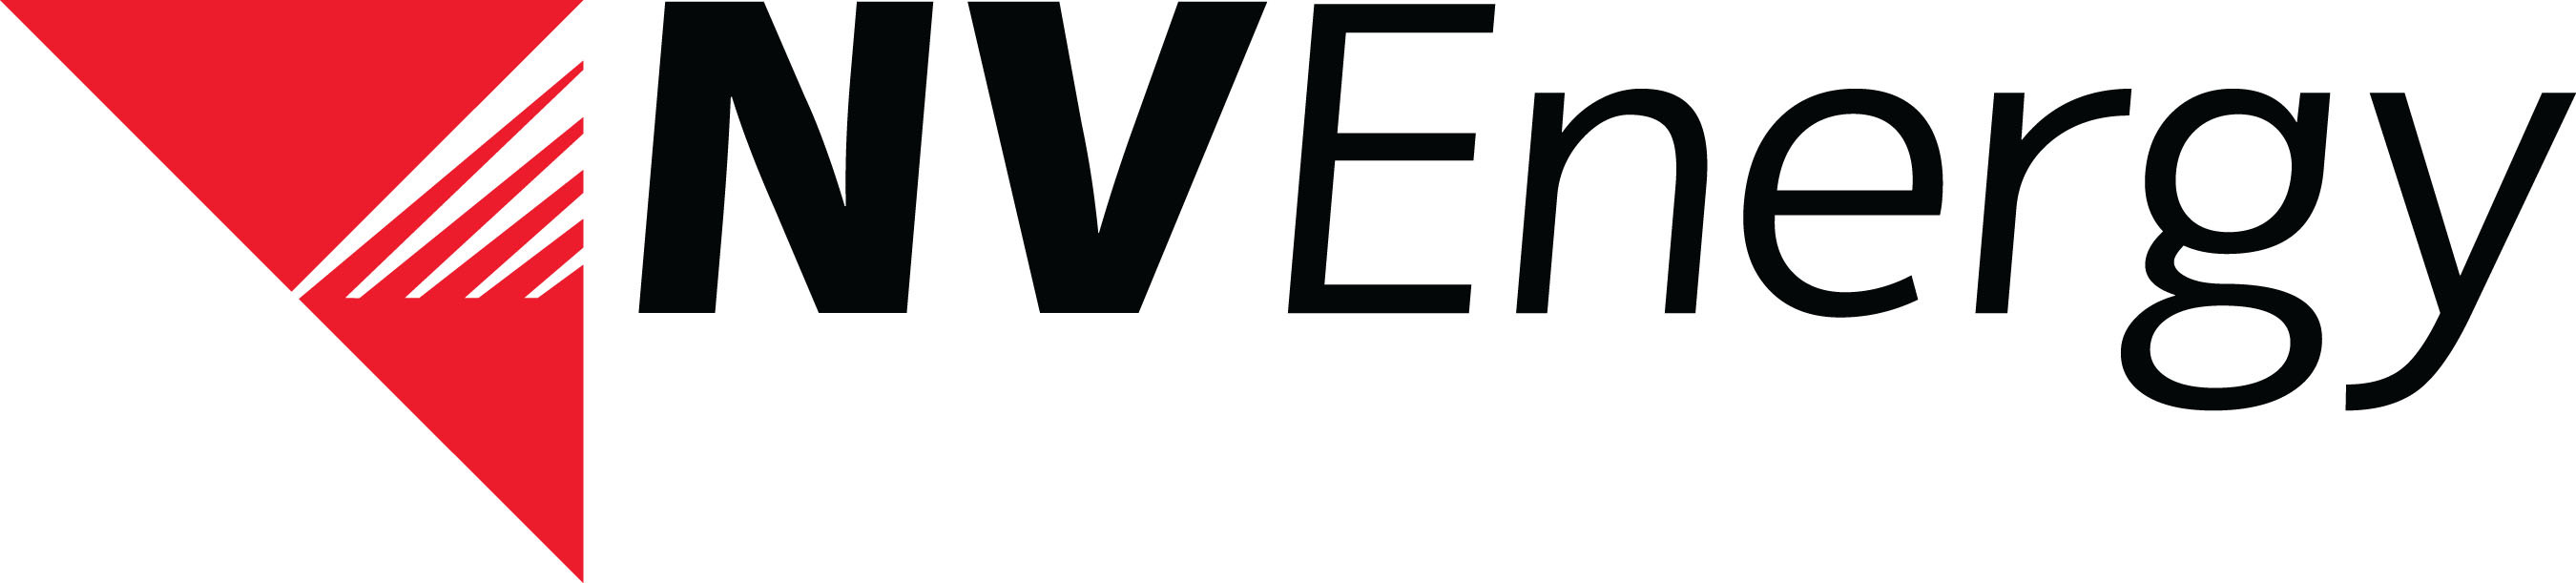 NV Energy logo.